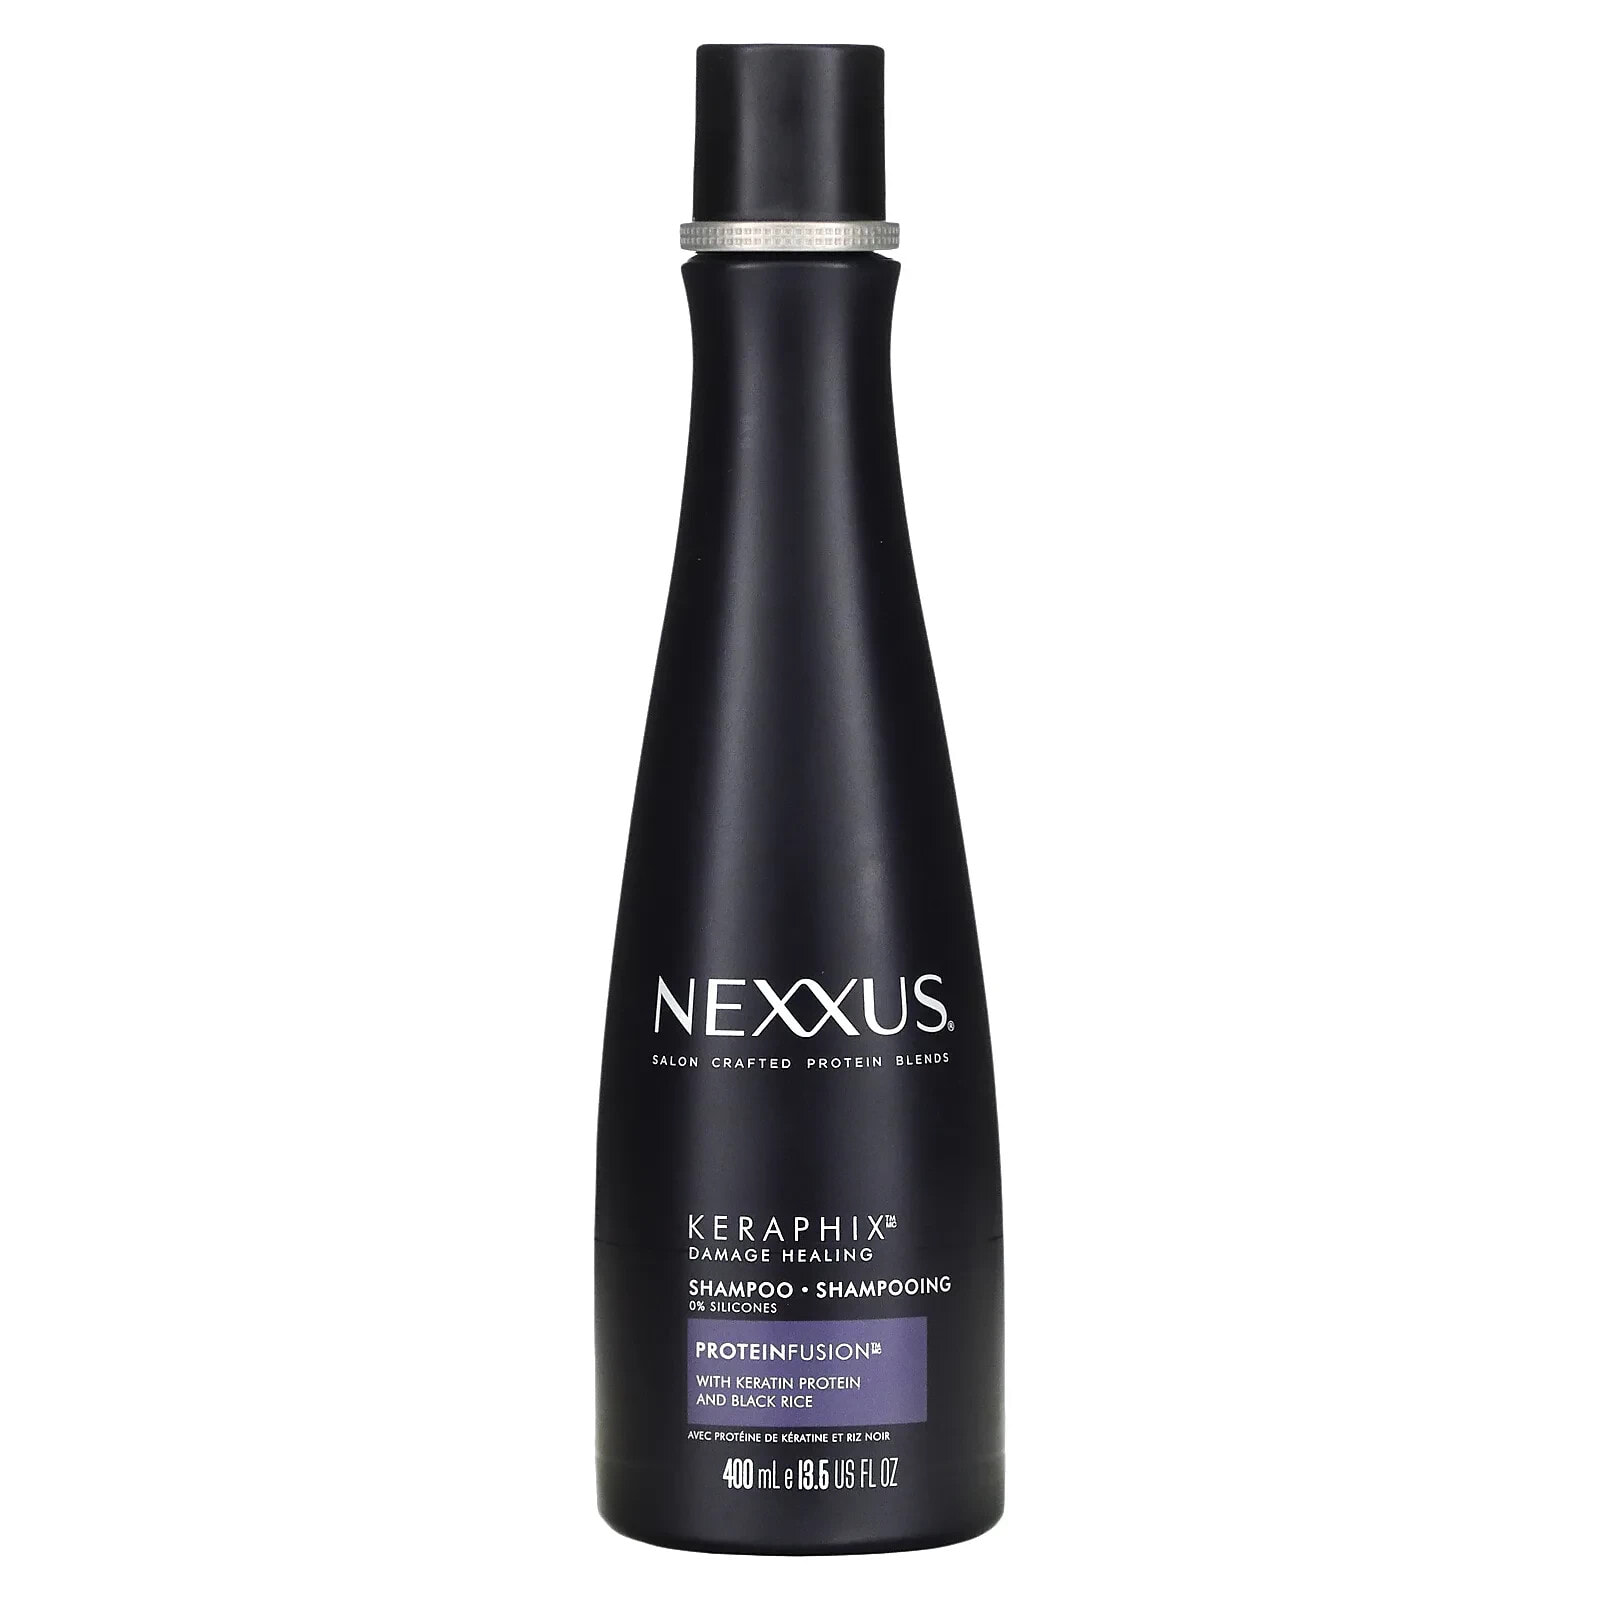 Keraphix Shampoo, For Severely Damaged Hair, Damage Healing, 13.5 fl oz (400 ml)